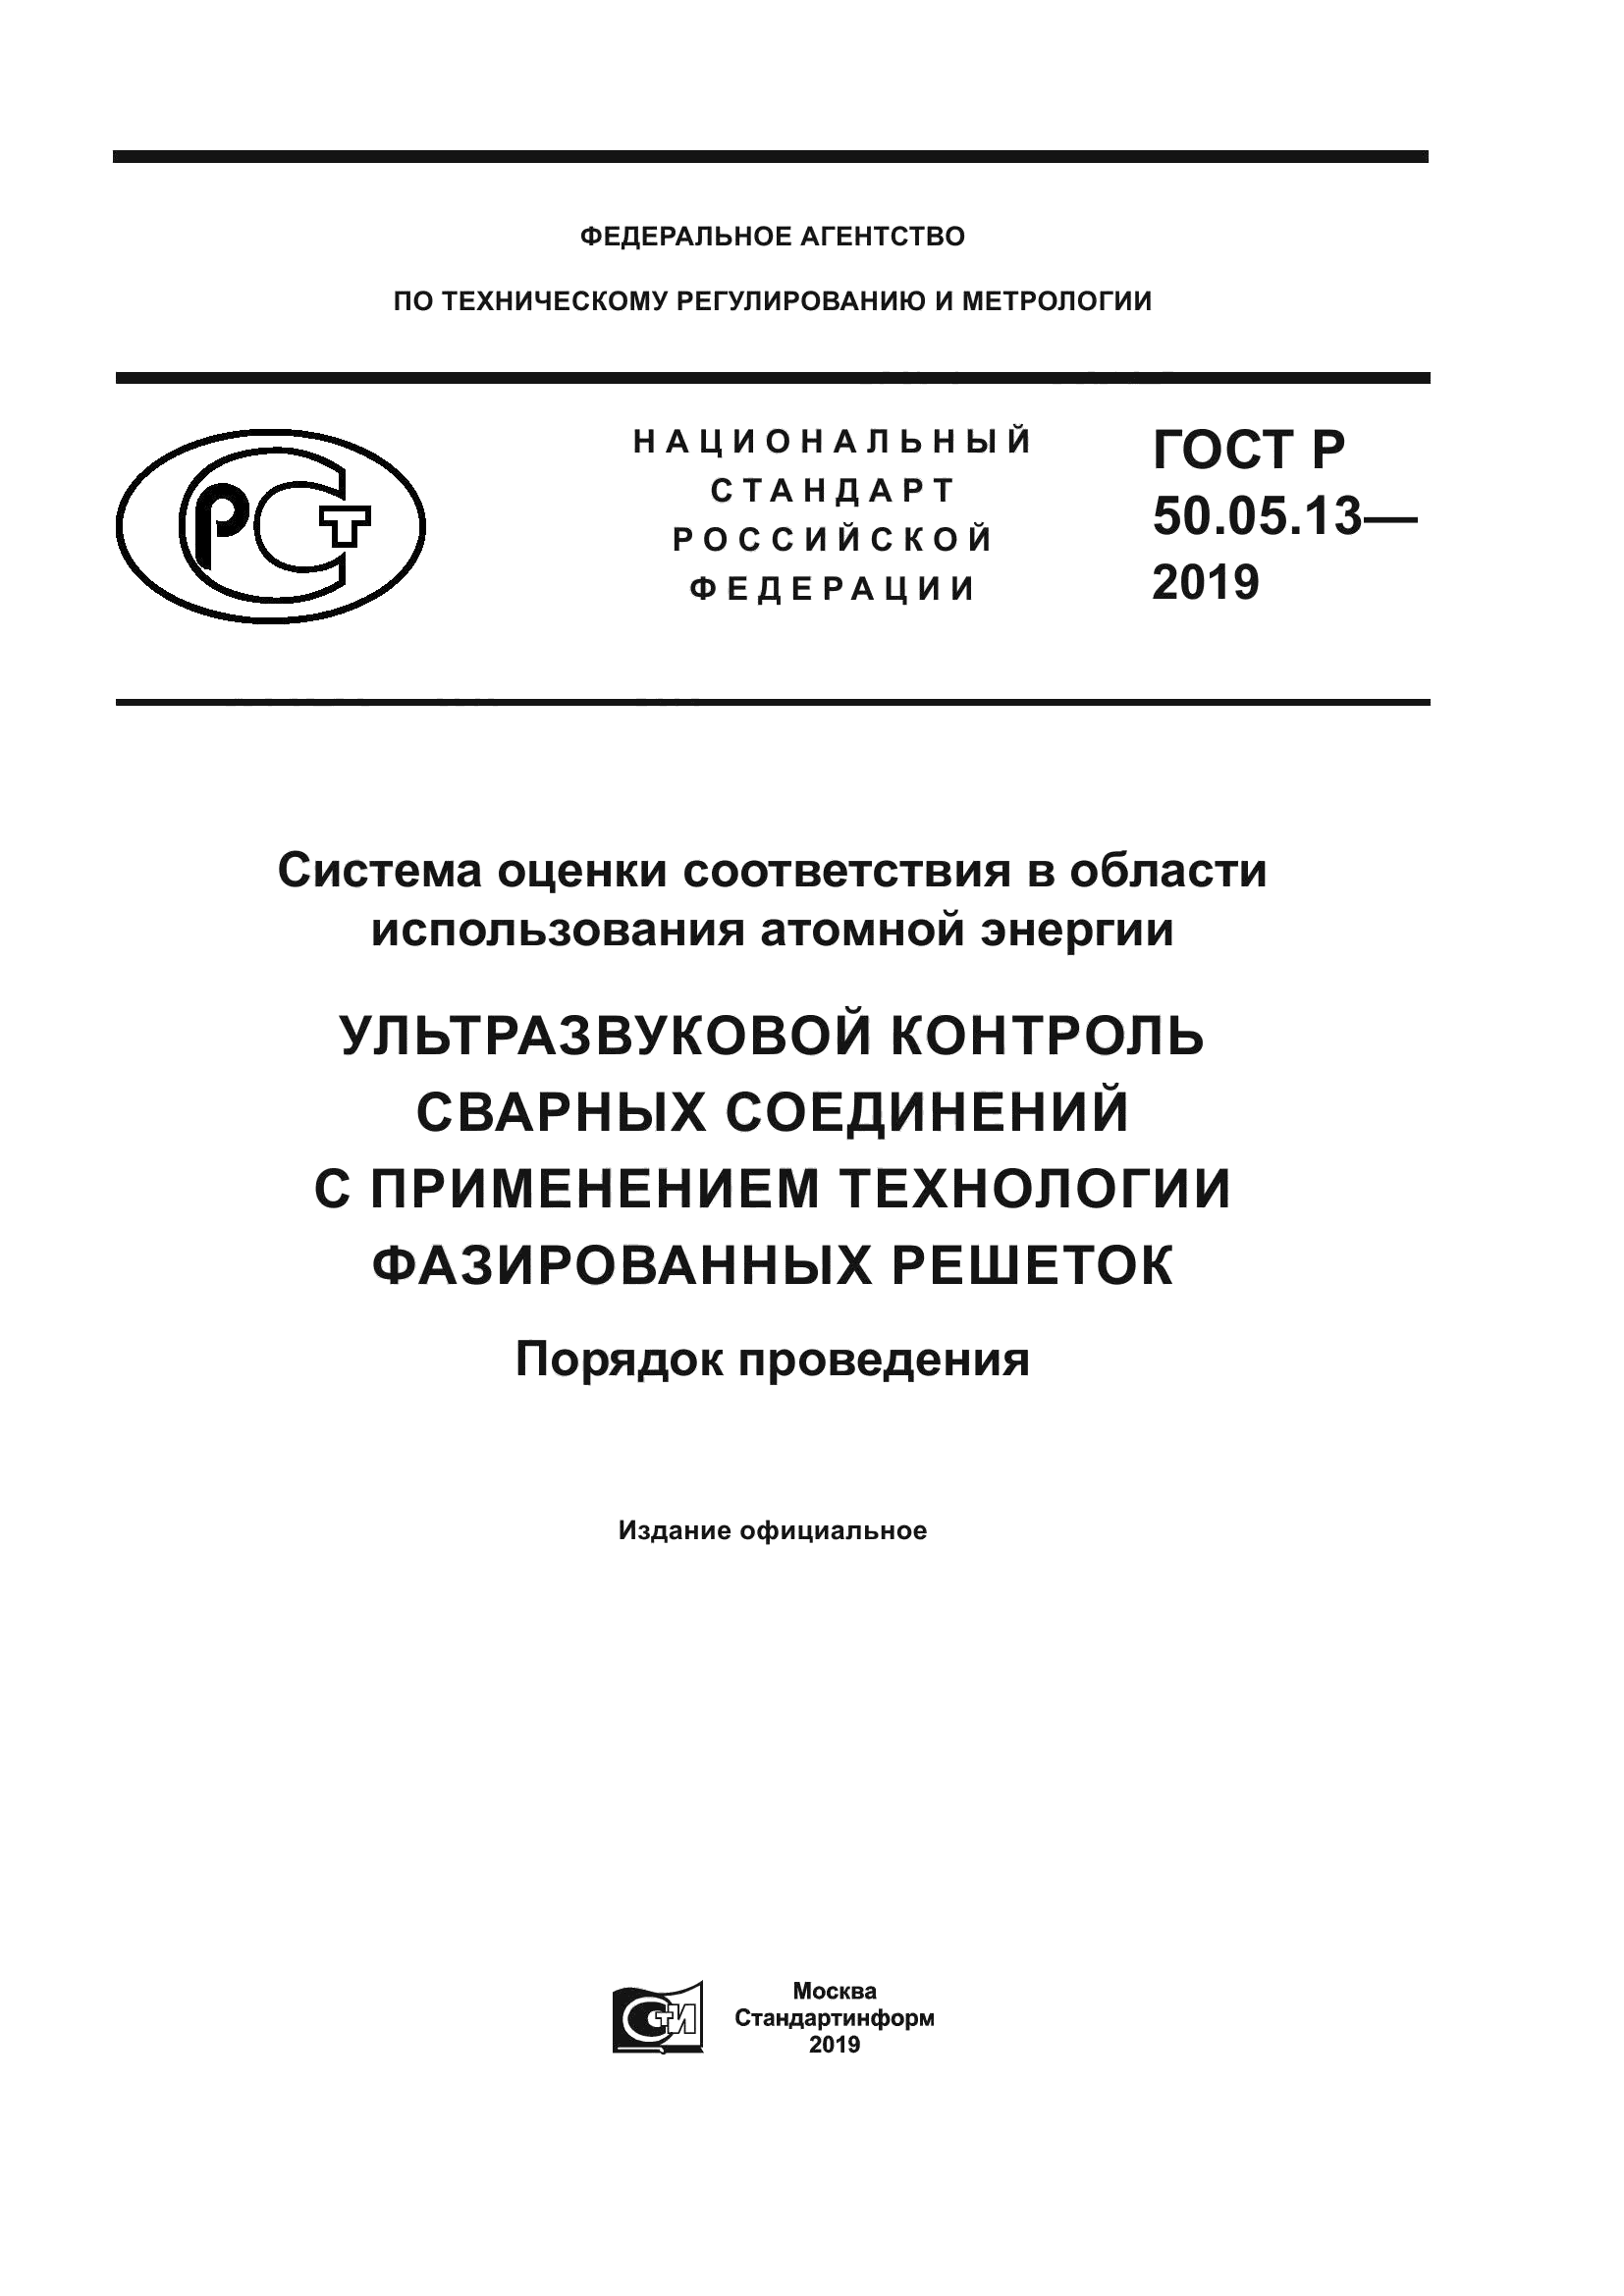 ГОСТ Р 50.05.13-2019